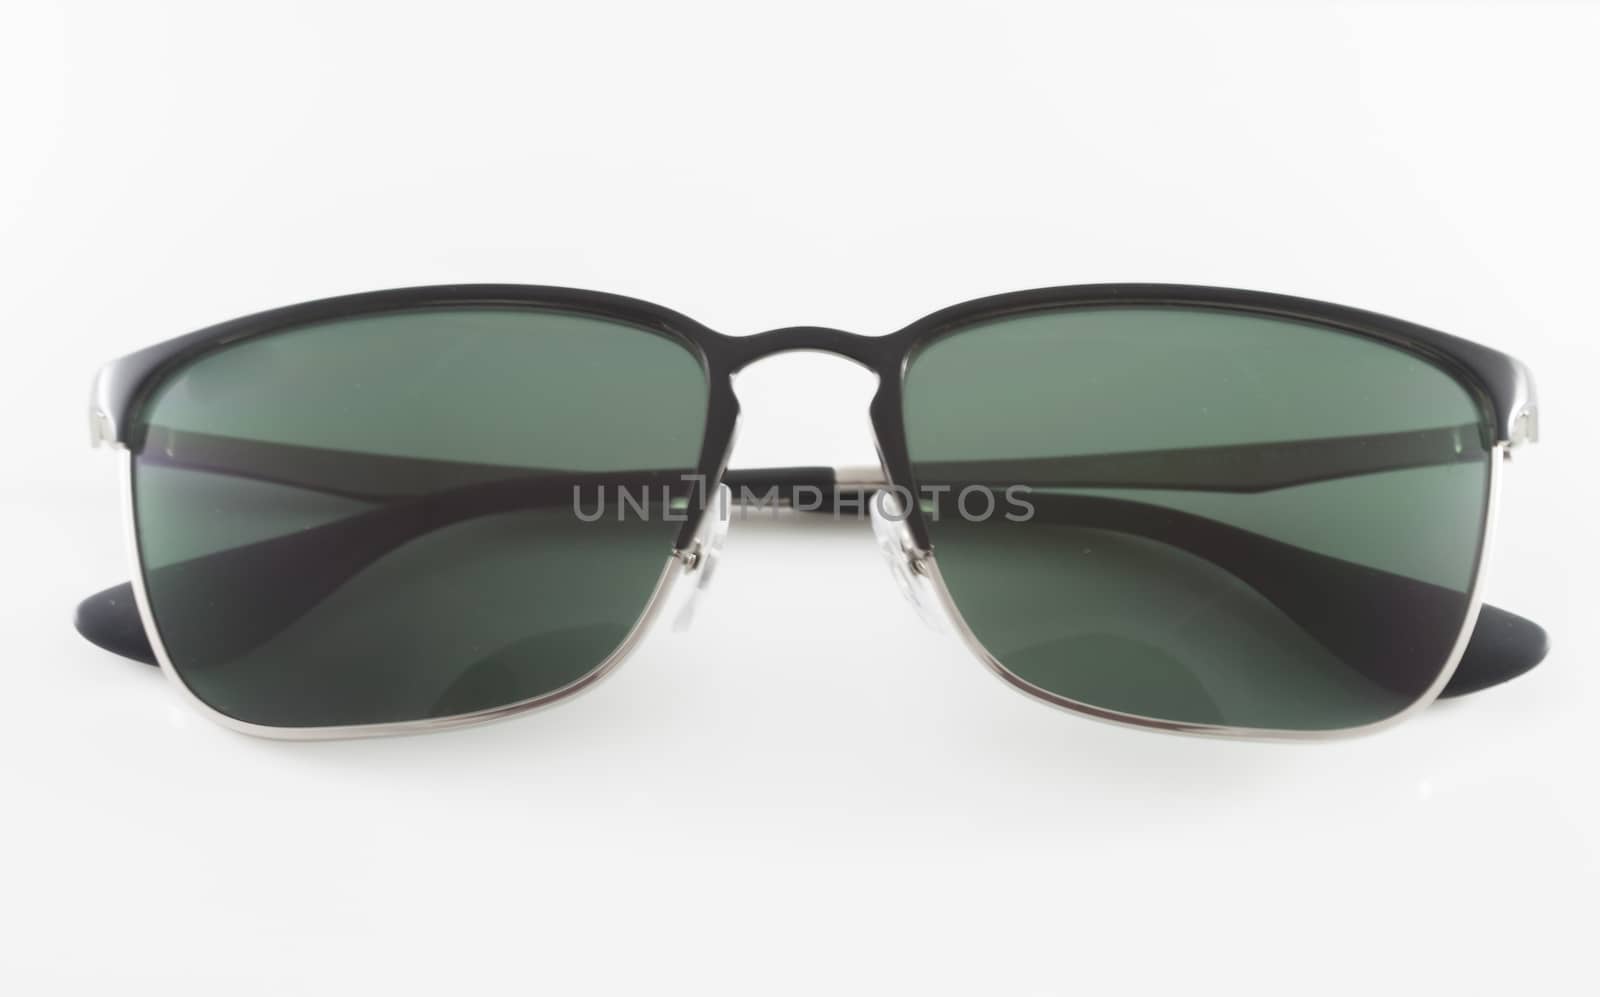 Famous style sunglasses isolated on white background, stock photo